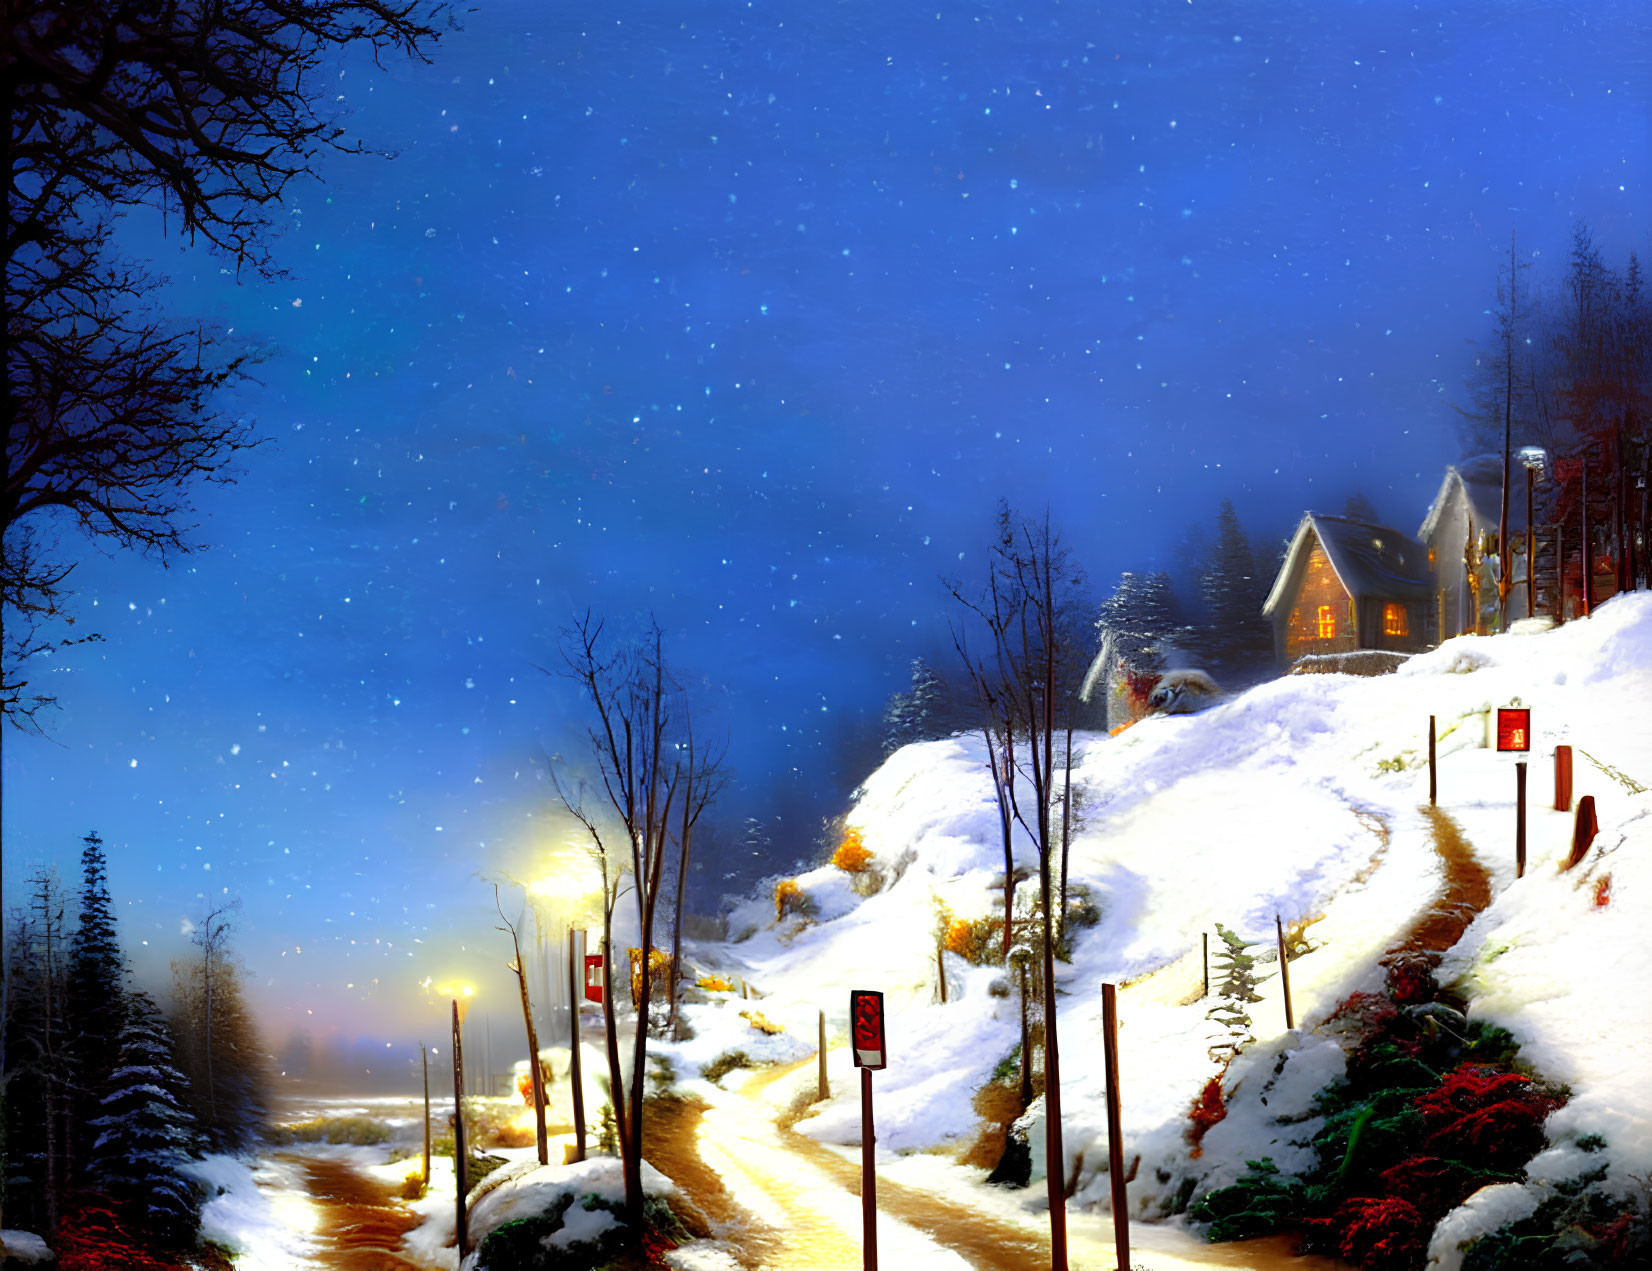 Snowy evening scene: warmly lit cabin, street lamps, falling snow, warning signs.